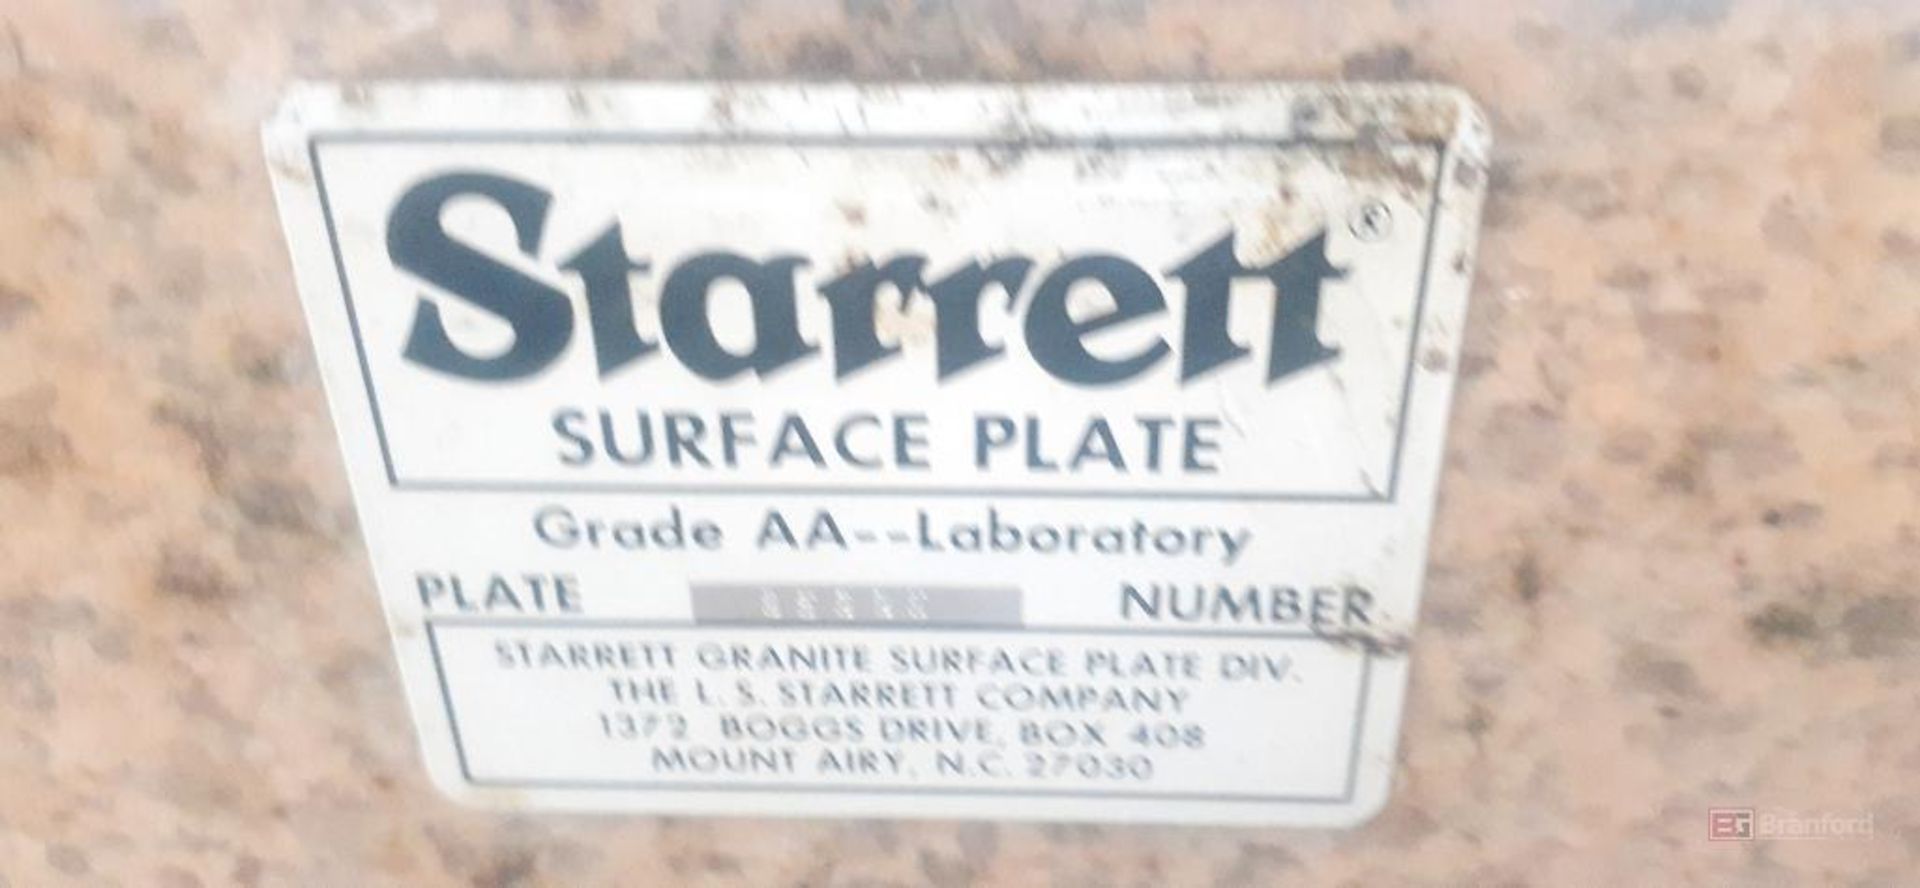 Starrett Granite Surface Plate - Image 3 of 3